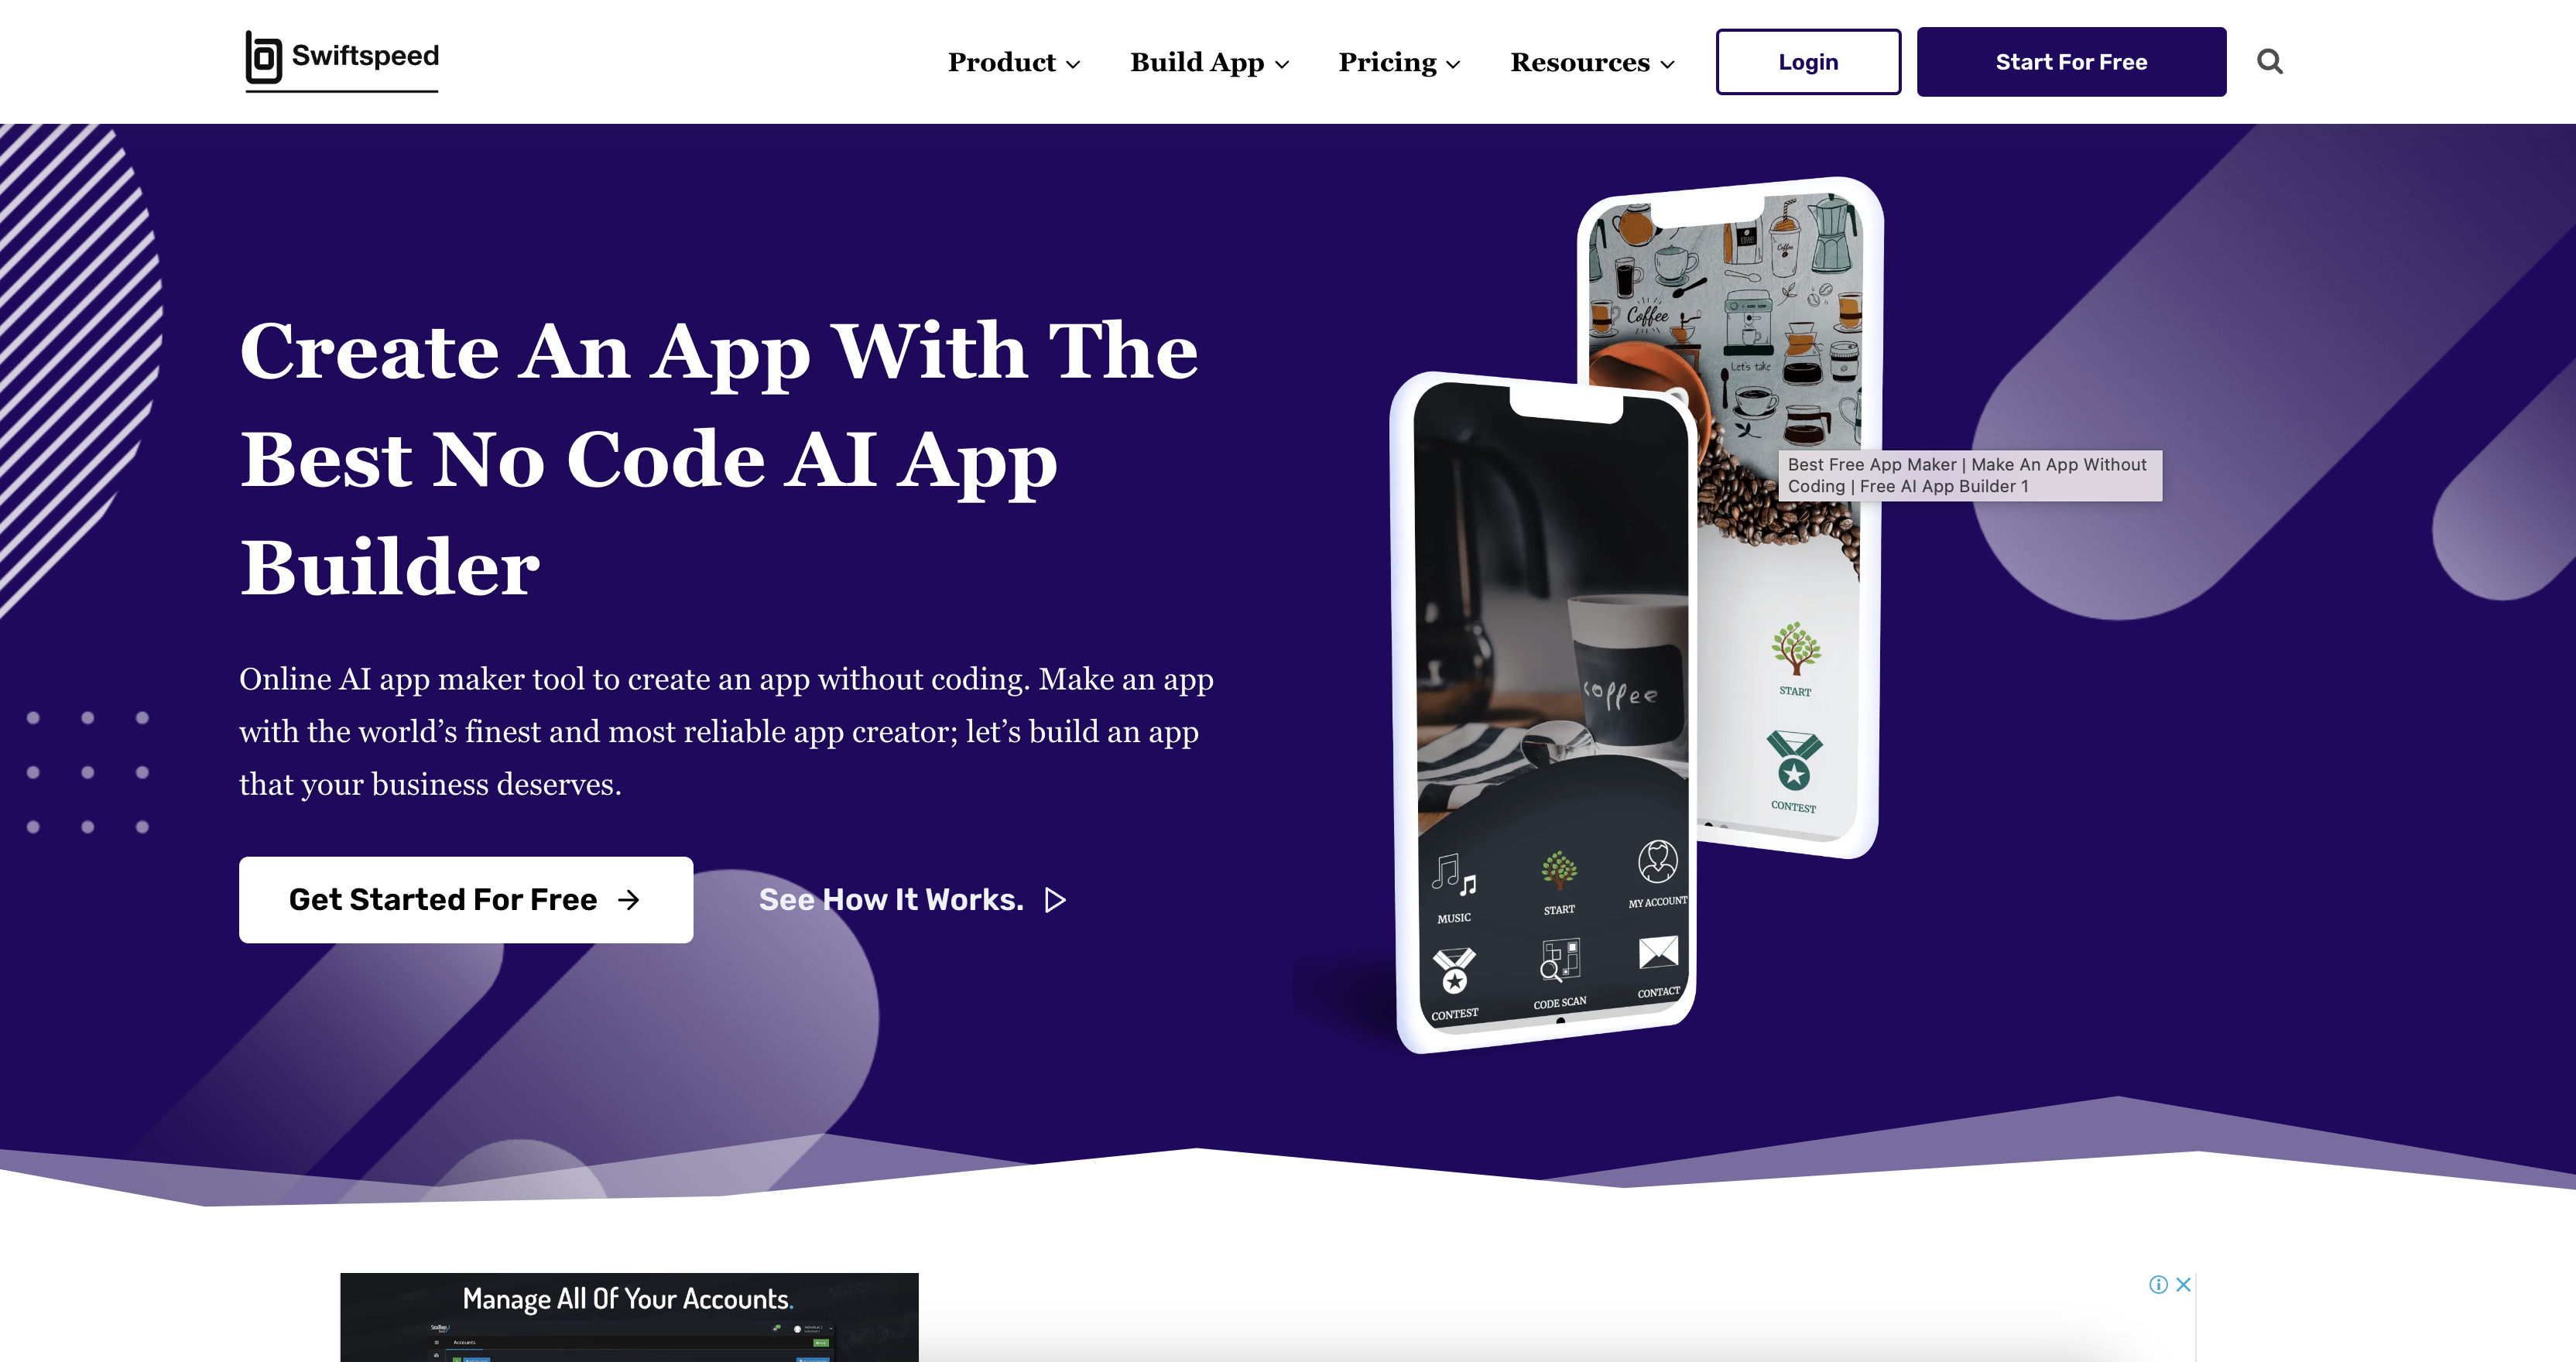 Swiftspeed App Homepage